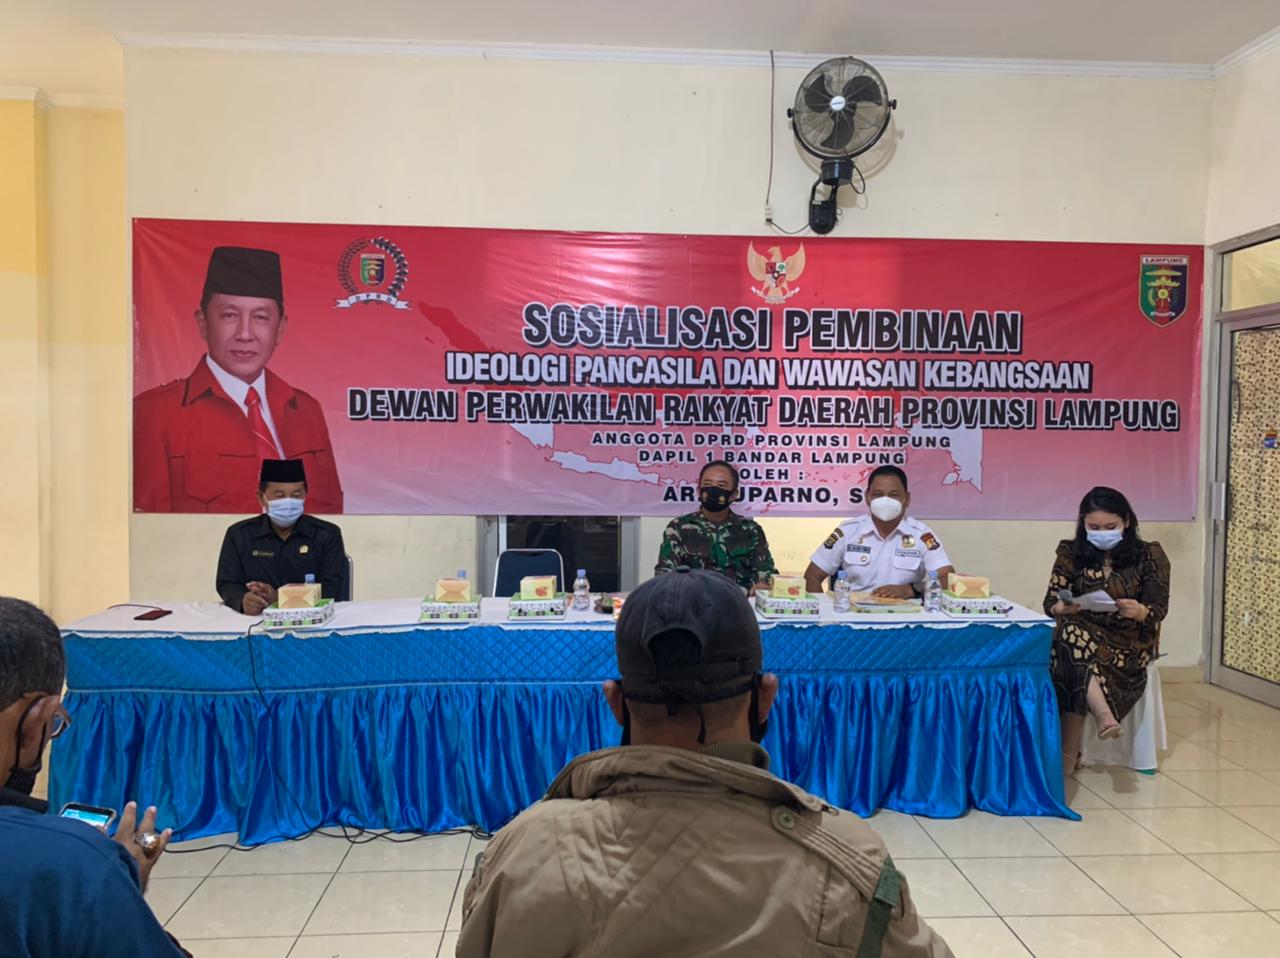 Mayor Inf Sutoto Memberikan Materi Tentang Ideologi Pancasila dan Wawasan Kebangsaan